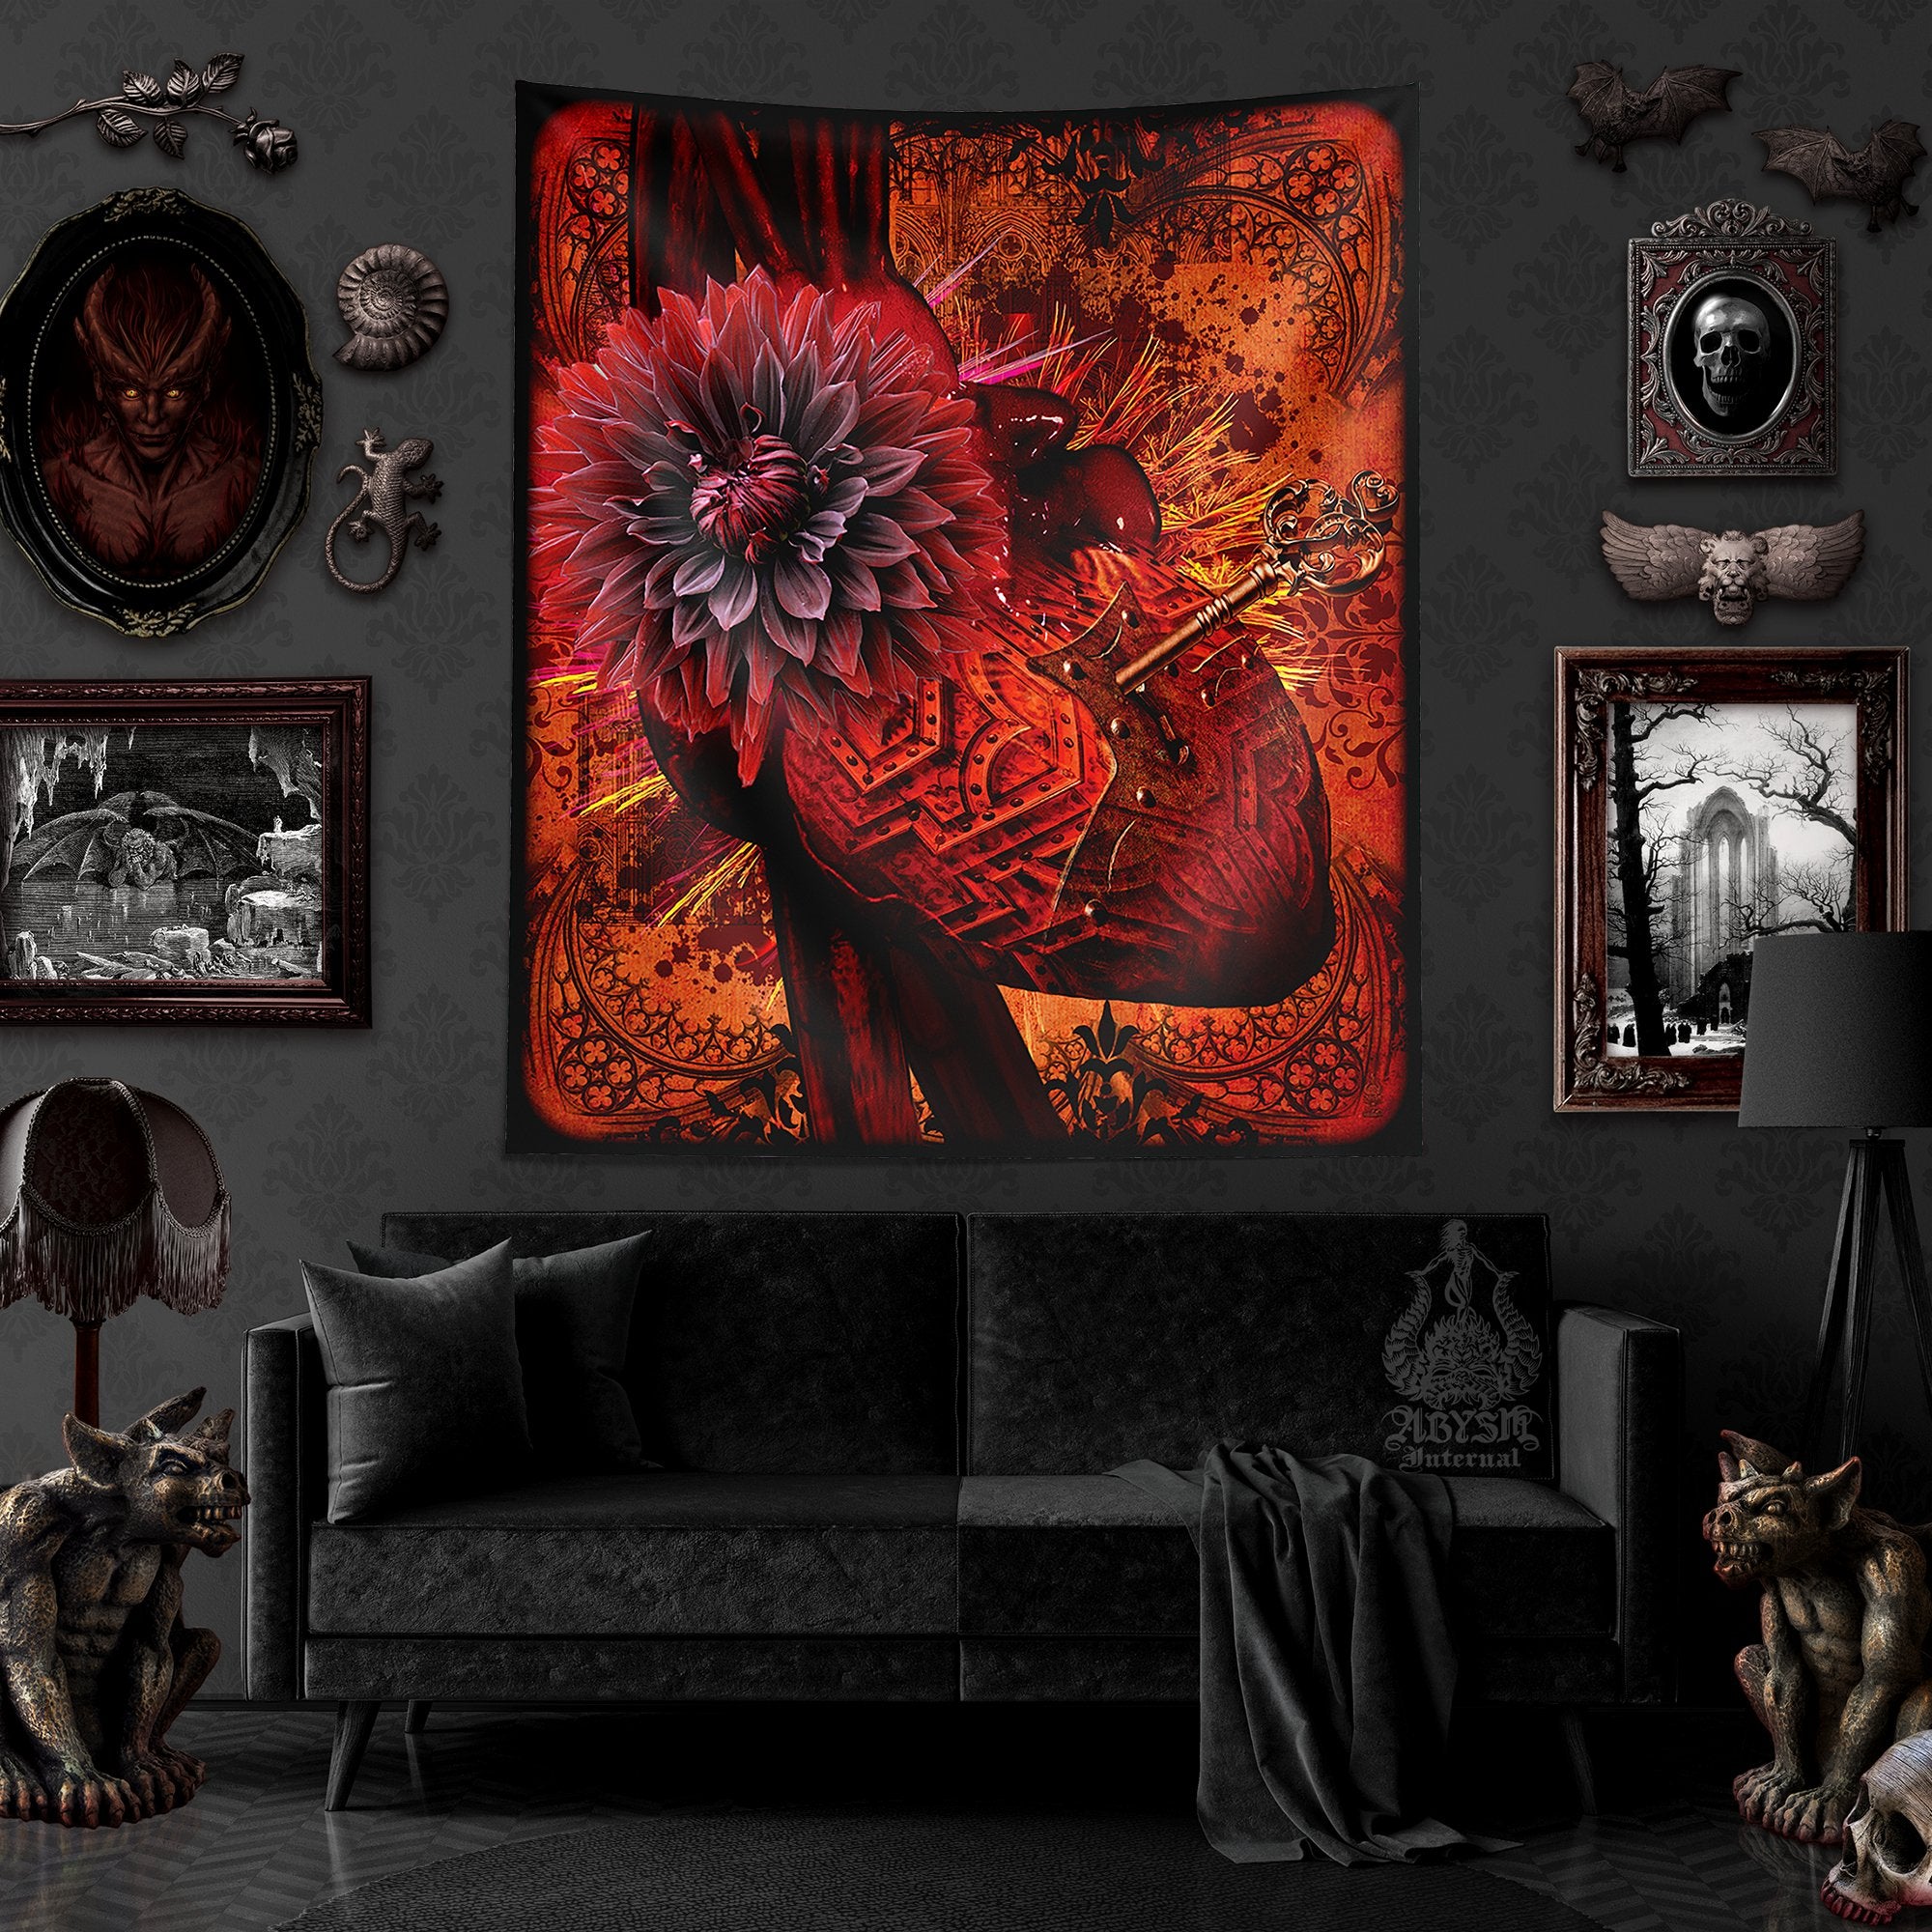 Goth Heart Tapestry, Gothic Wall Hanging, Dark Grunge Home Decor, Vertical Art Print - Abysm Internal